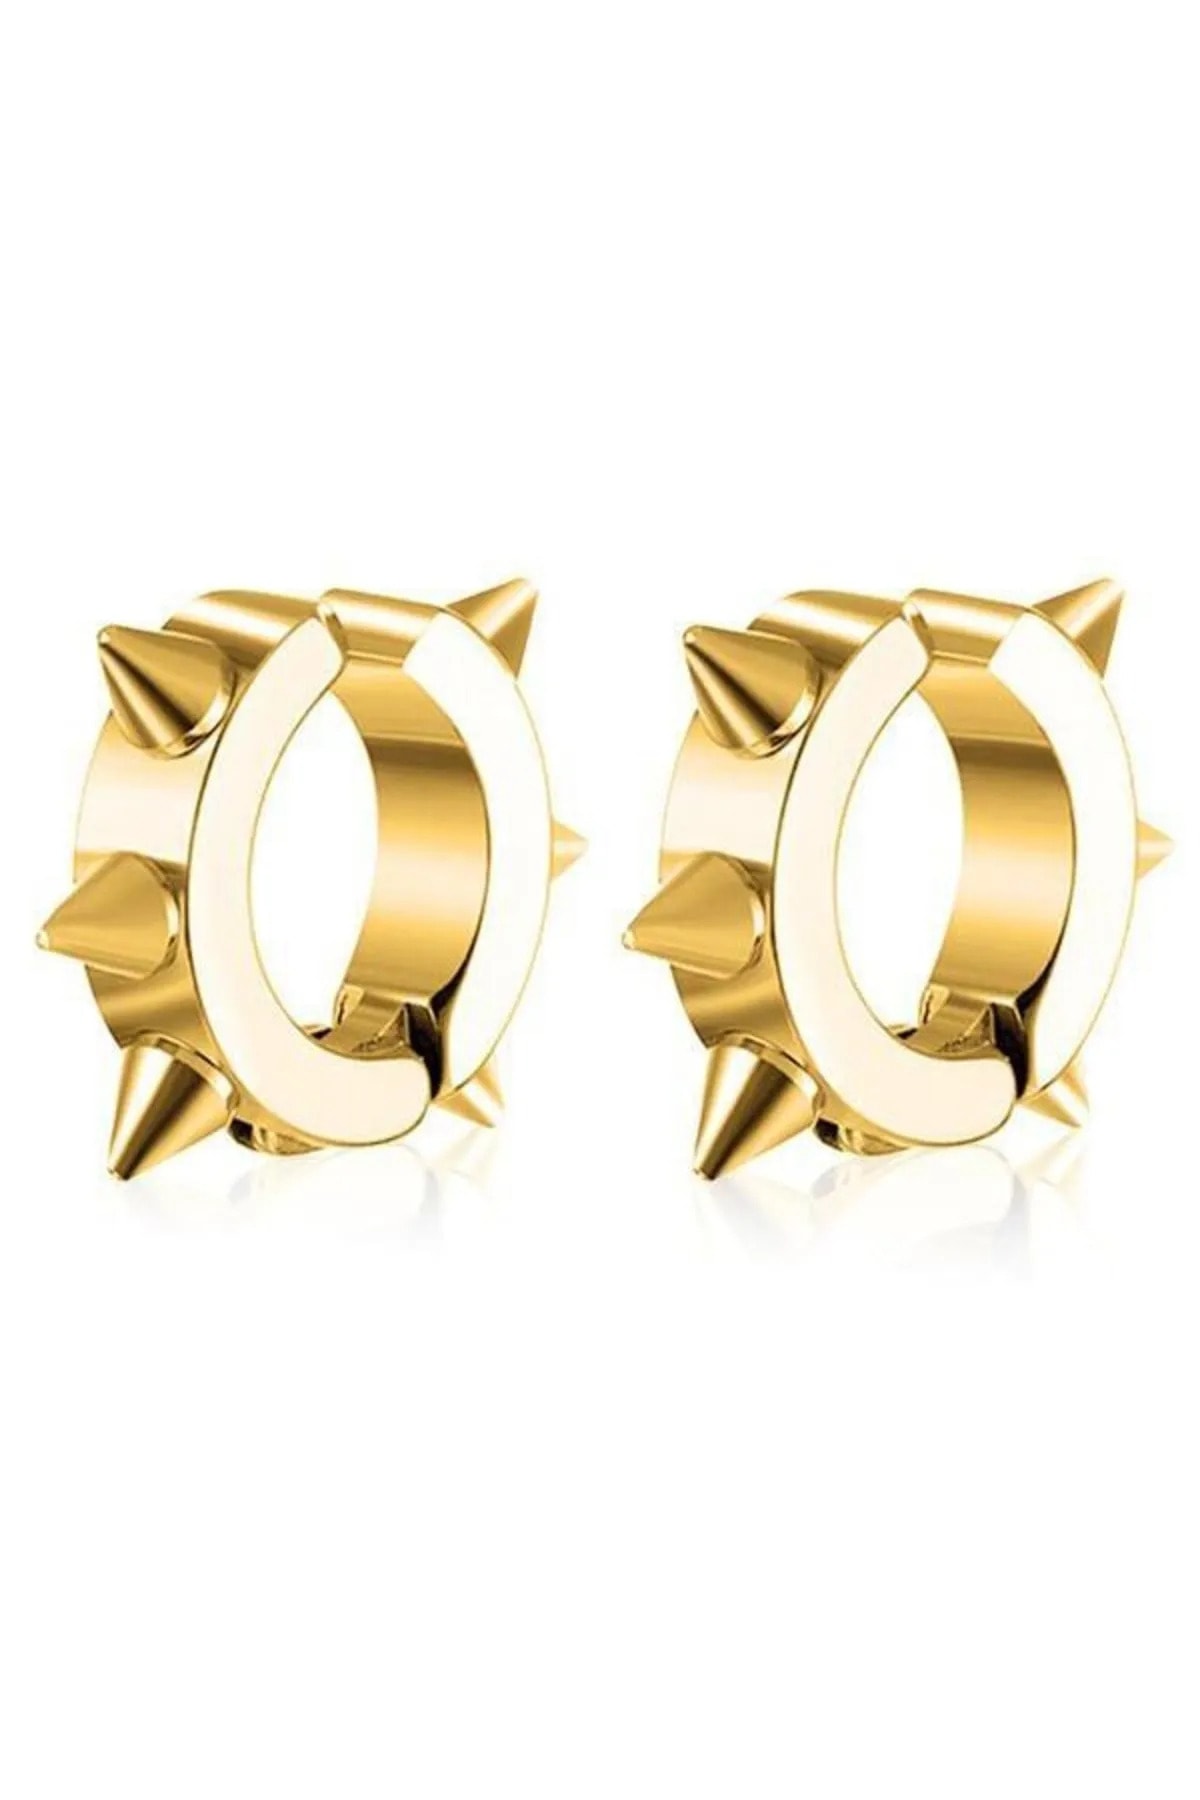 Barbados Trident Stud Earrings - Gold - Isura - Jamii